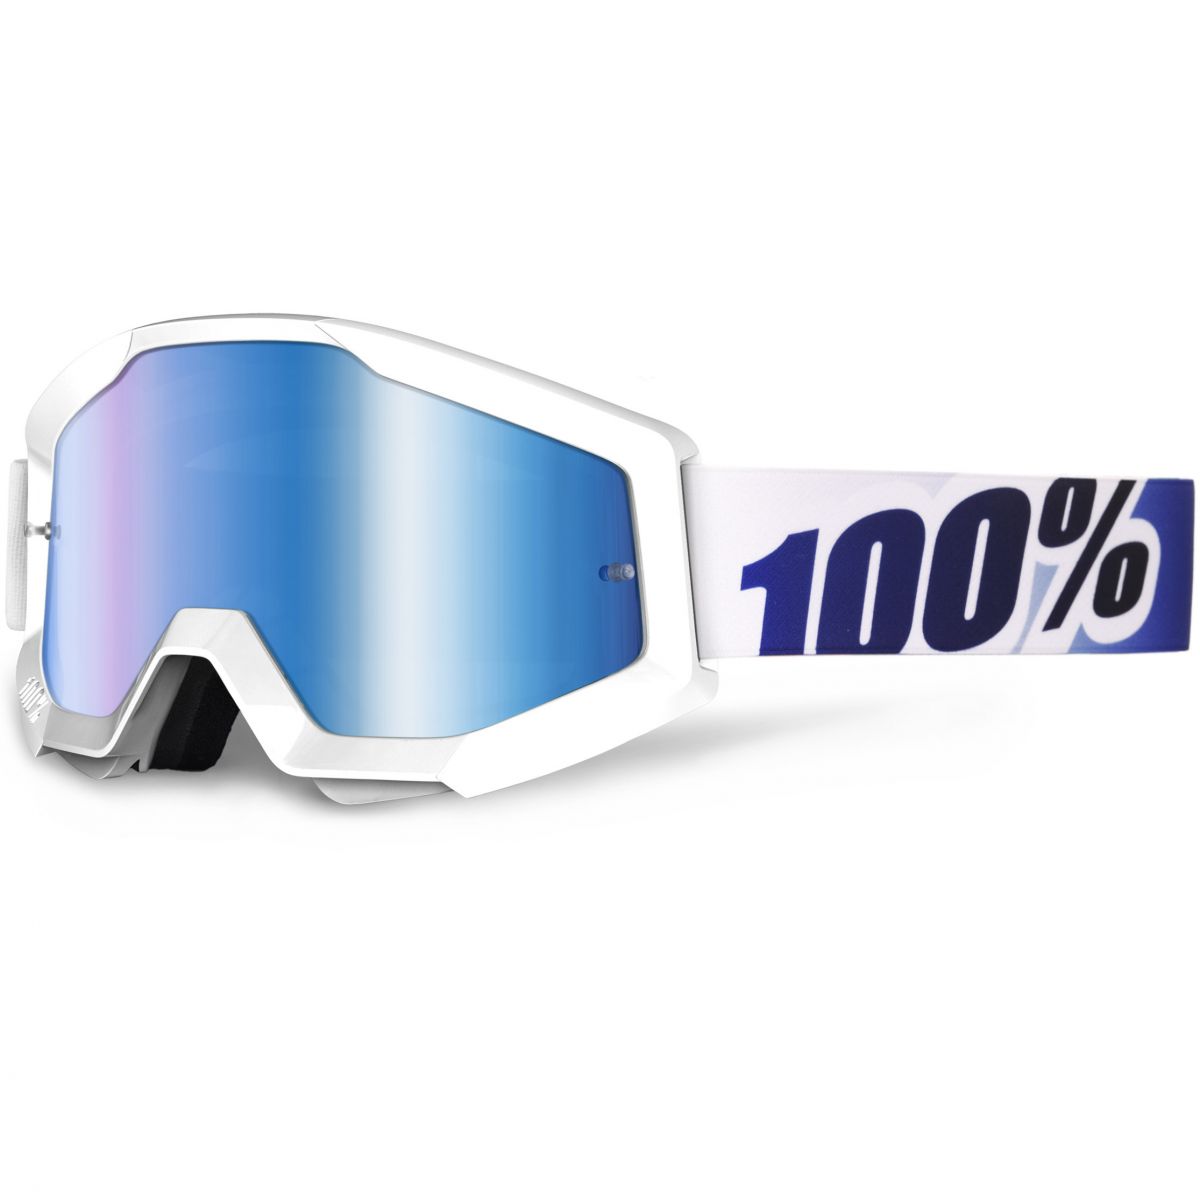 100% - Strata Ice Age очки, линза зеркальная, синяя